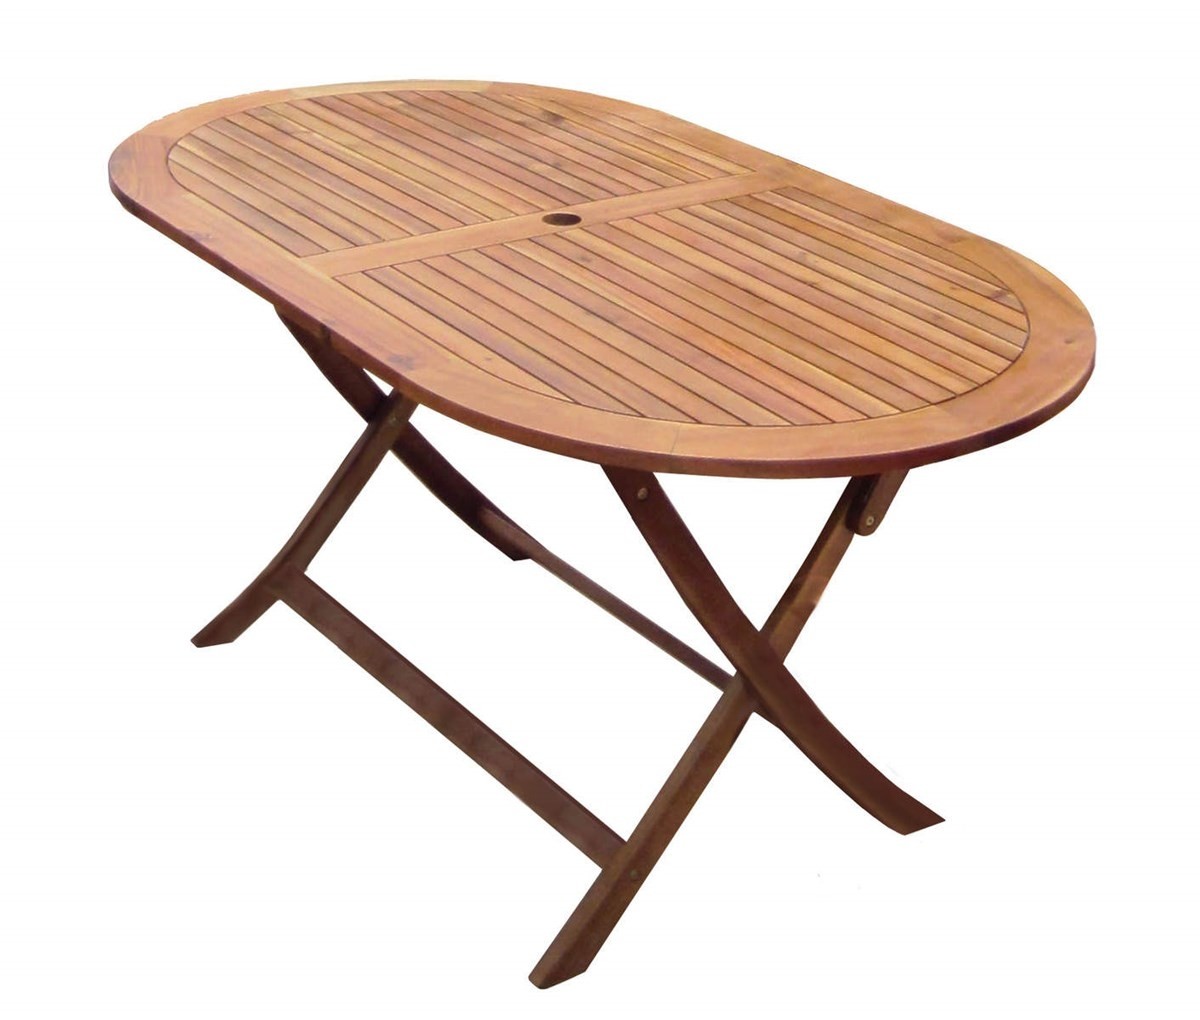 Folding wooden garden table oval